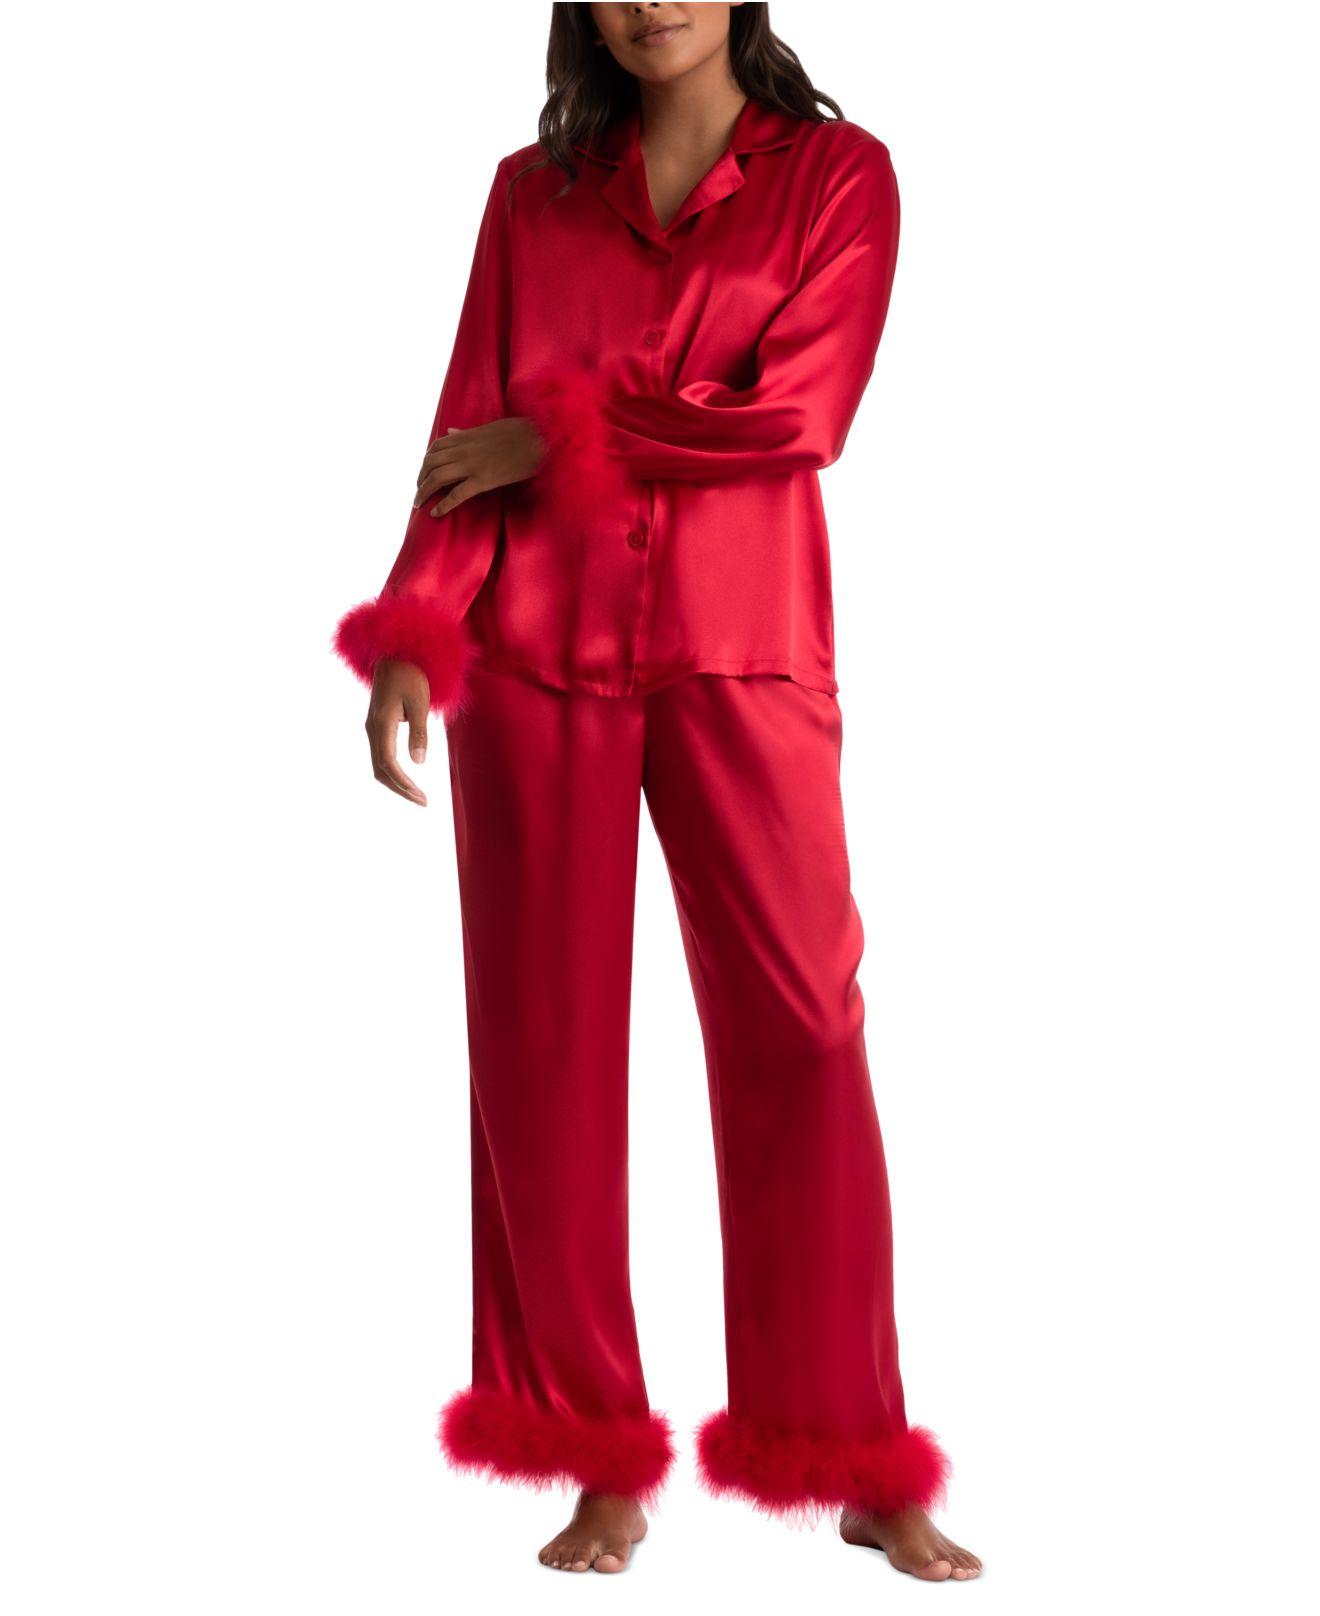 https://cdna.lystit.com/photos/macys/d25c7514/linea-donatella-Crimson-Marabou-Feather-Satin-Pajama-Set.jpeg